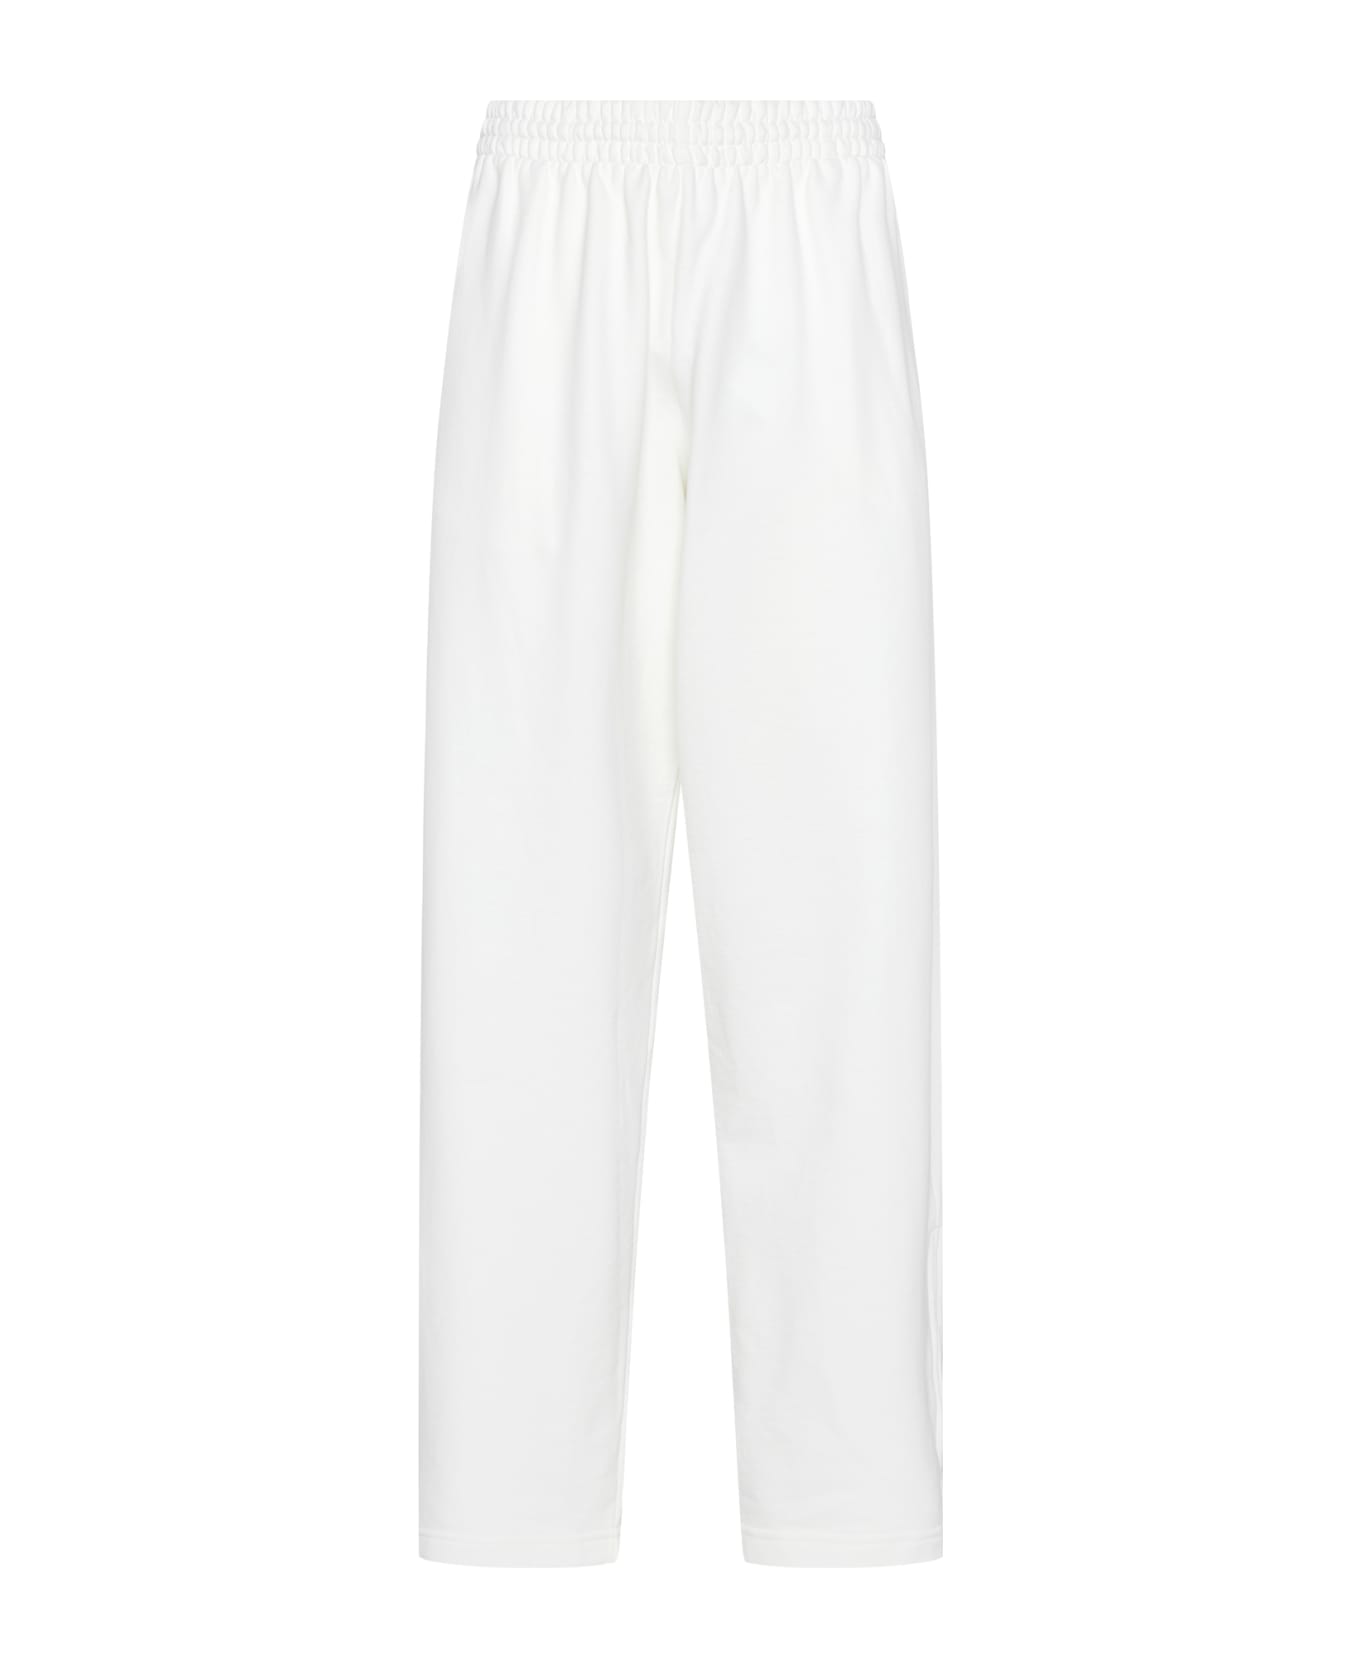 WARDROBE.NYC Pants - Off white